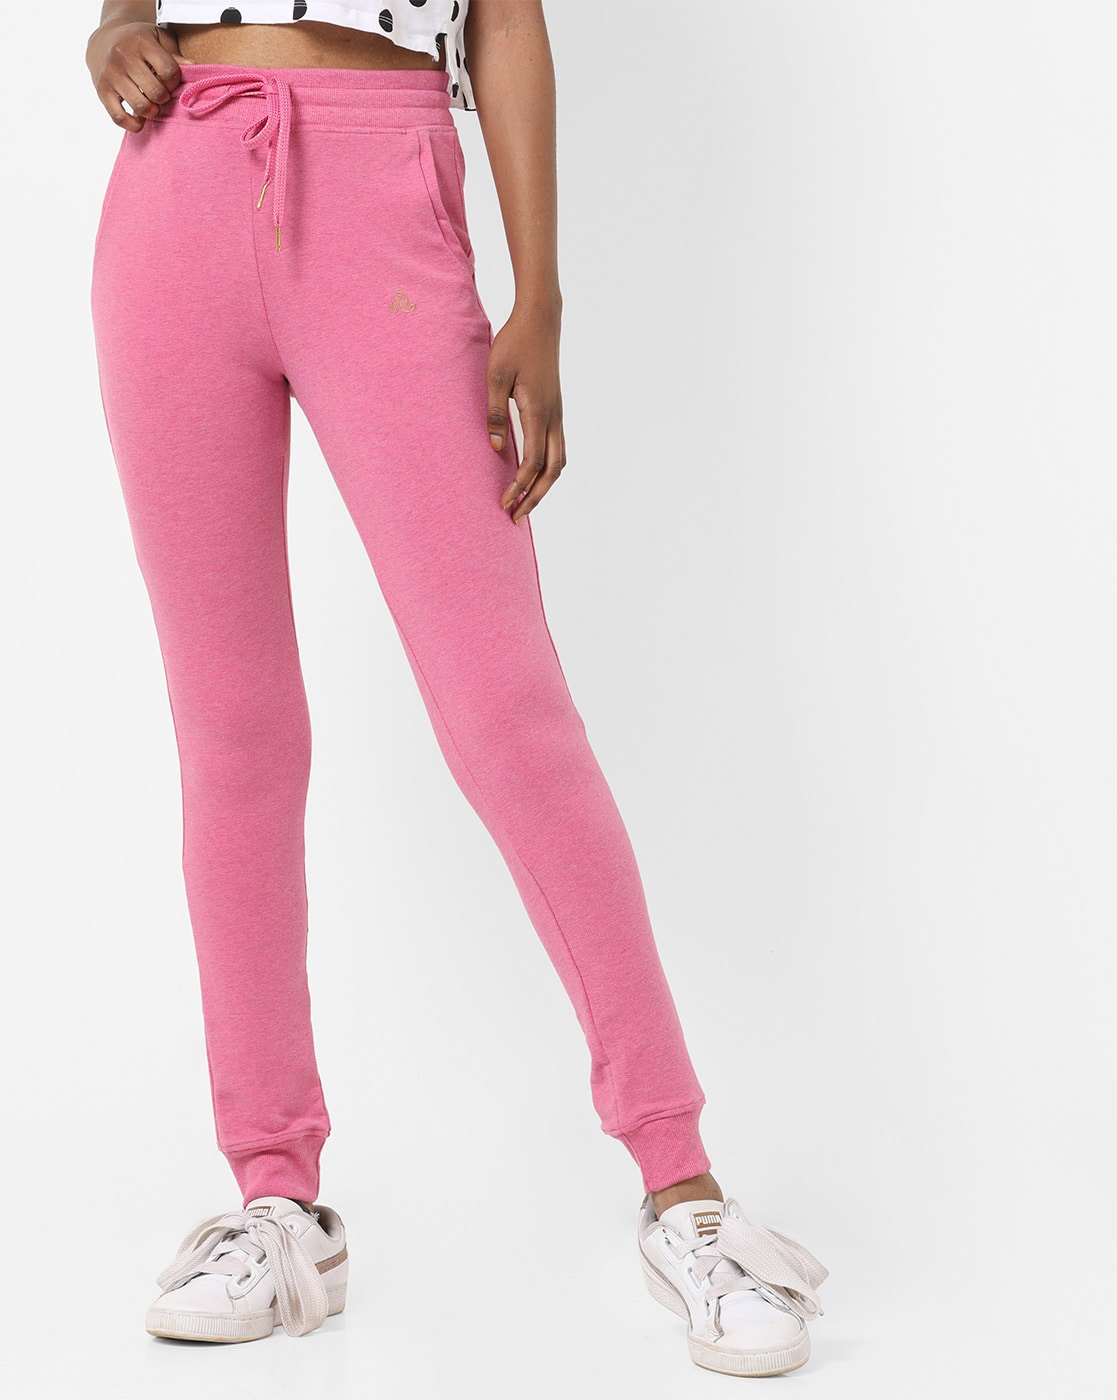 Buy Mystere Paris Cute Pink, Black Checked Rayon Pyjamas online